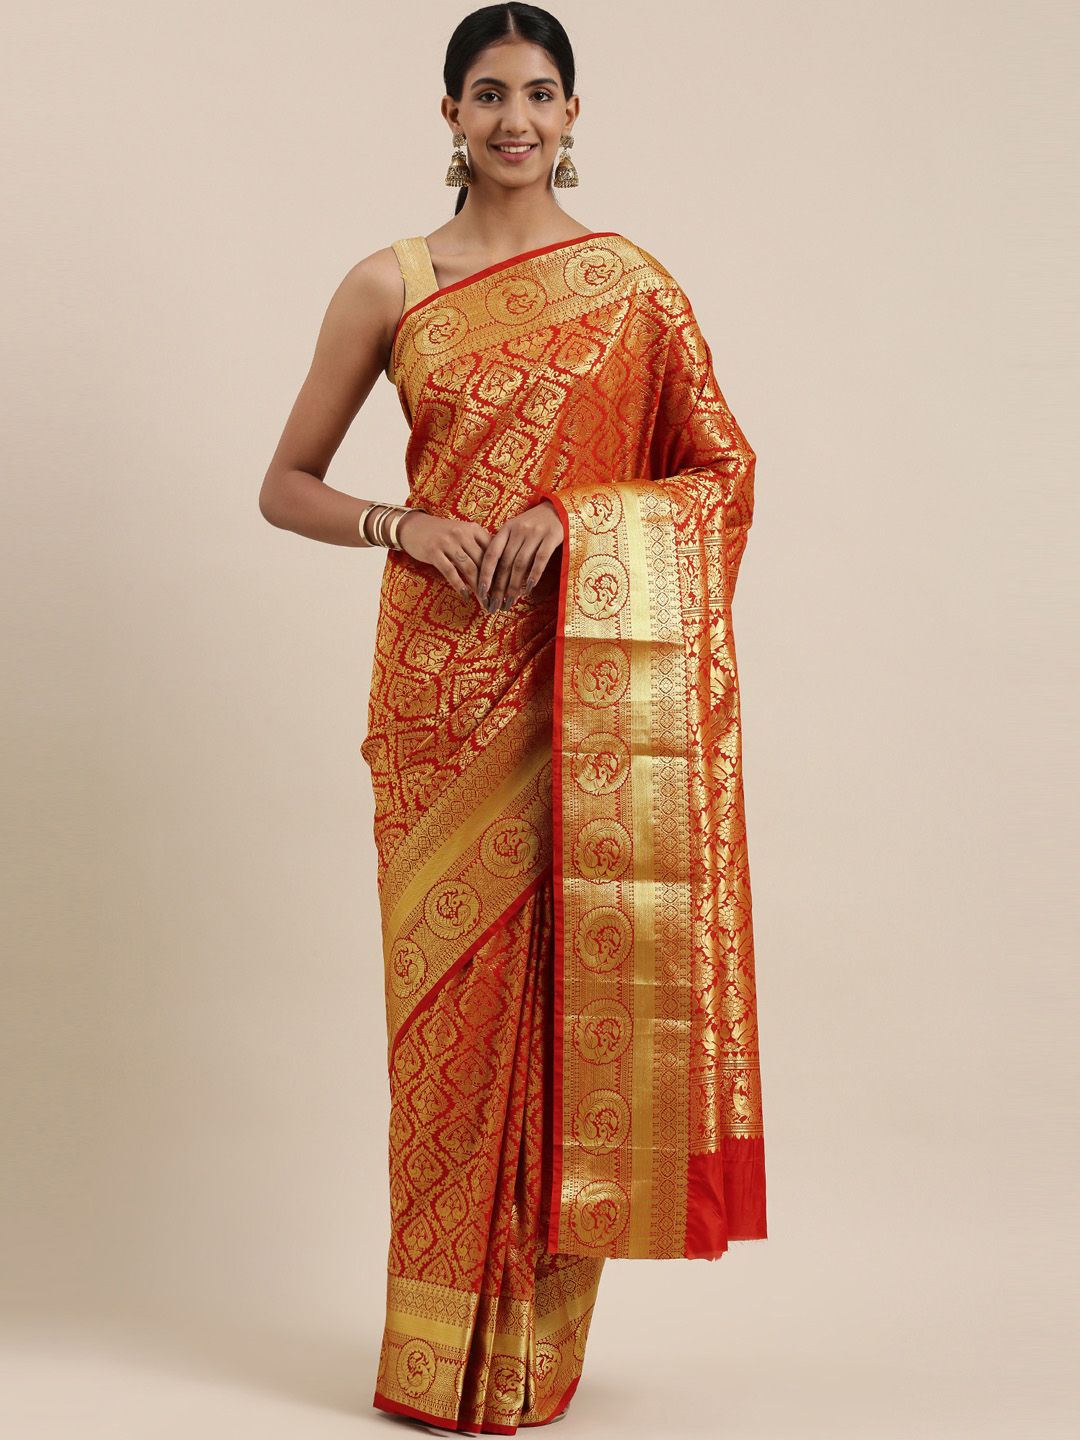 The Chennai Silks Red & Gold-Toned Ethnic Motifs Zari Art Silk Saree Price in India